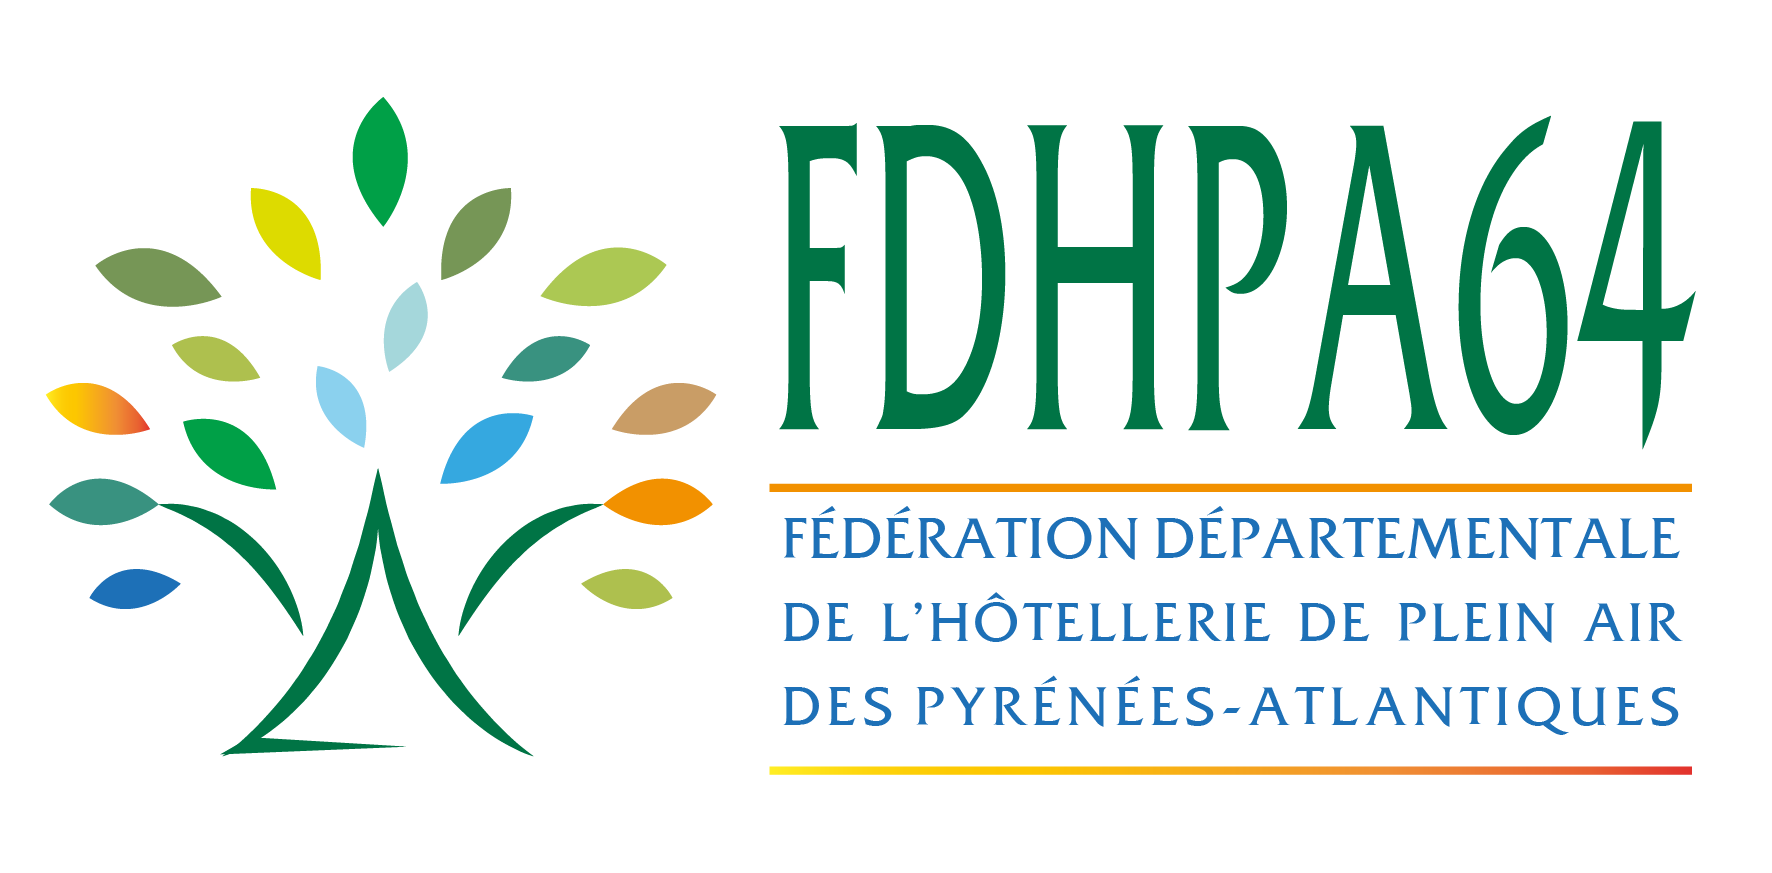 FDHPA64